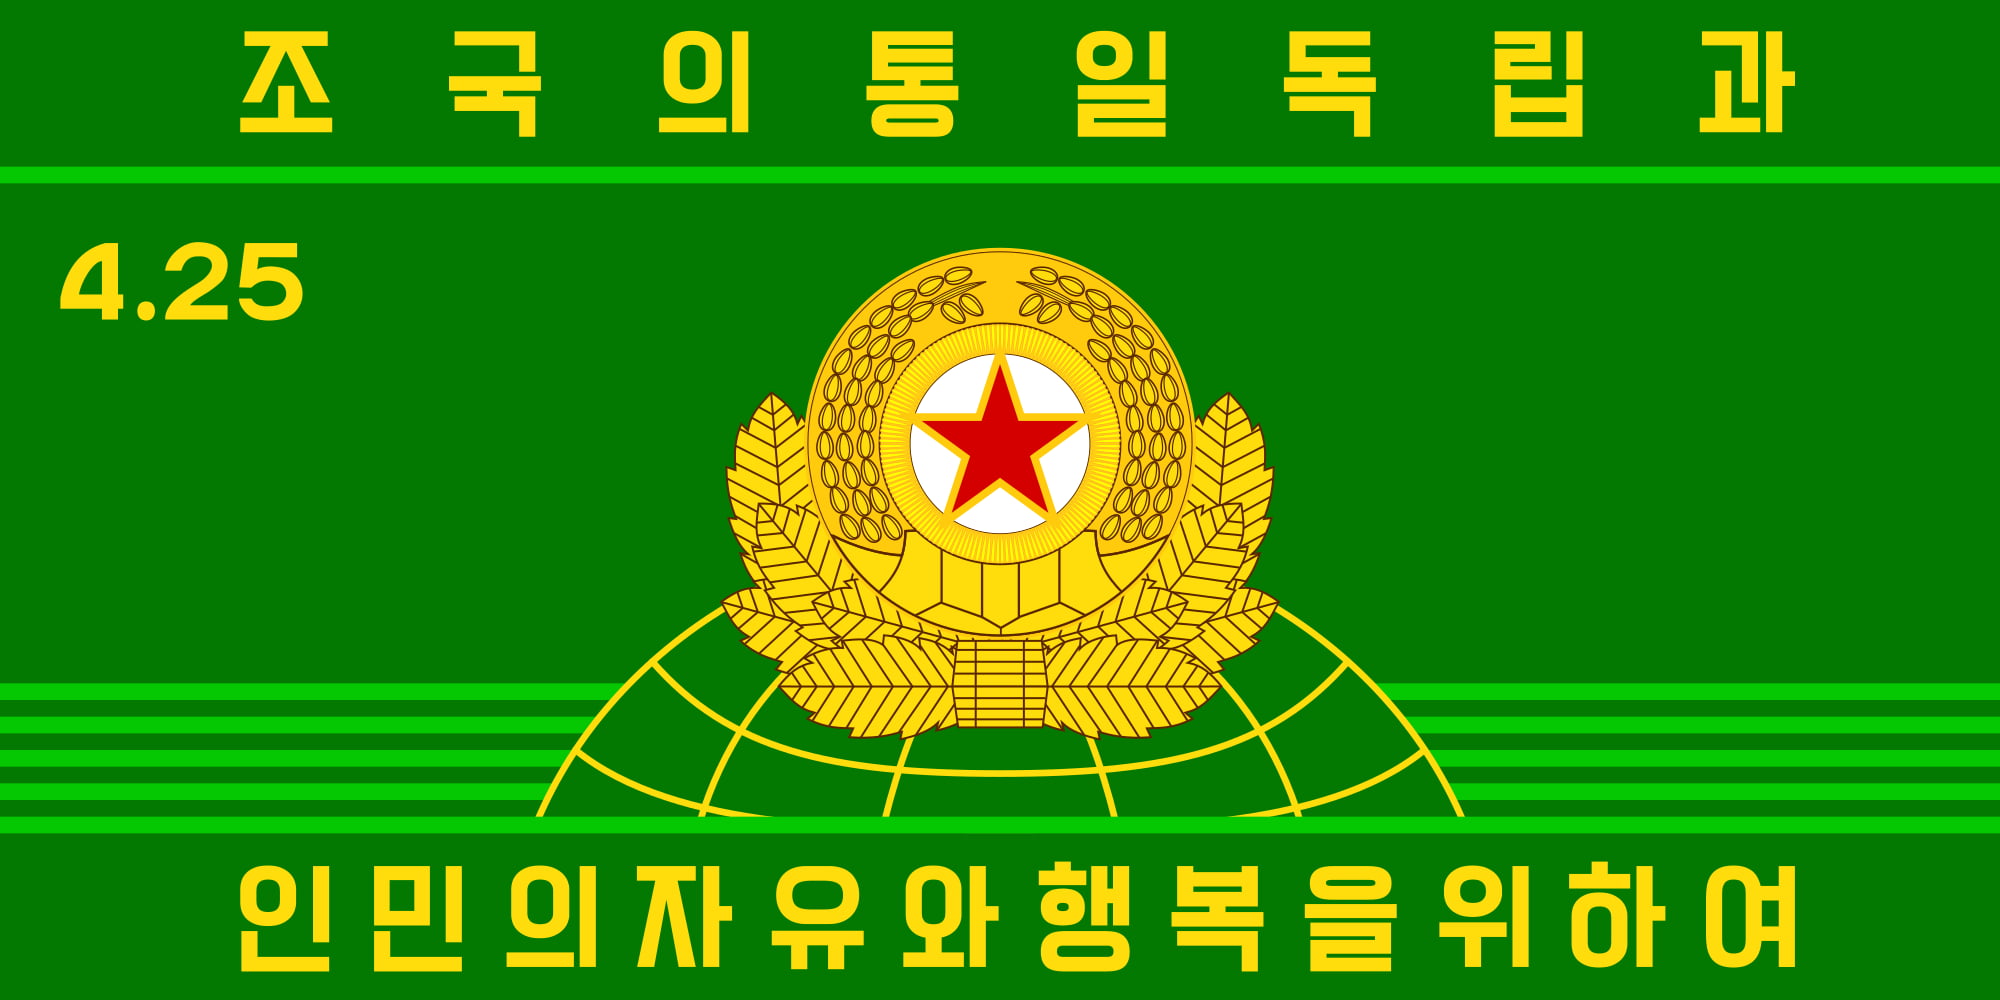 North Korea, flag, military, communism